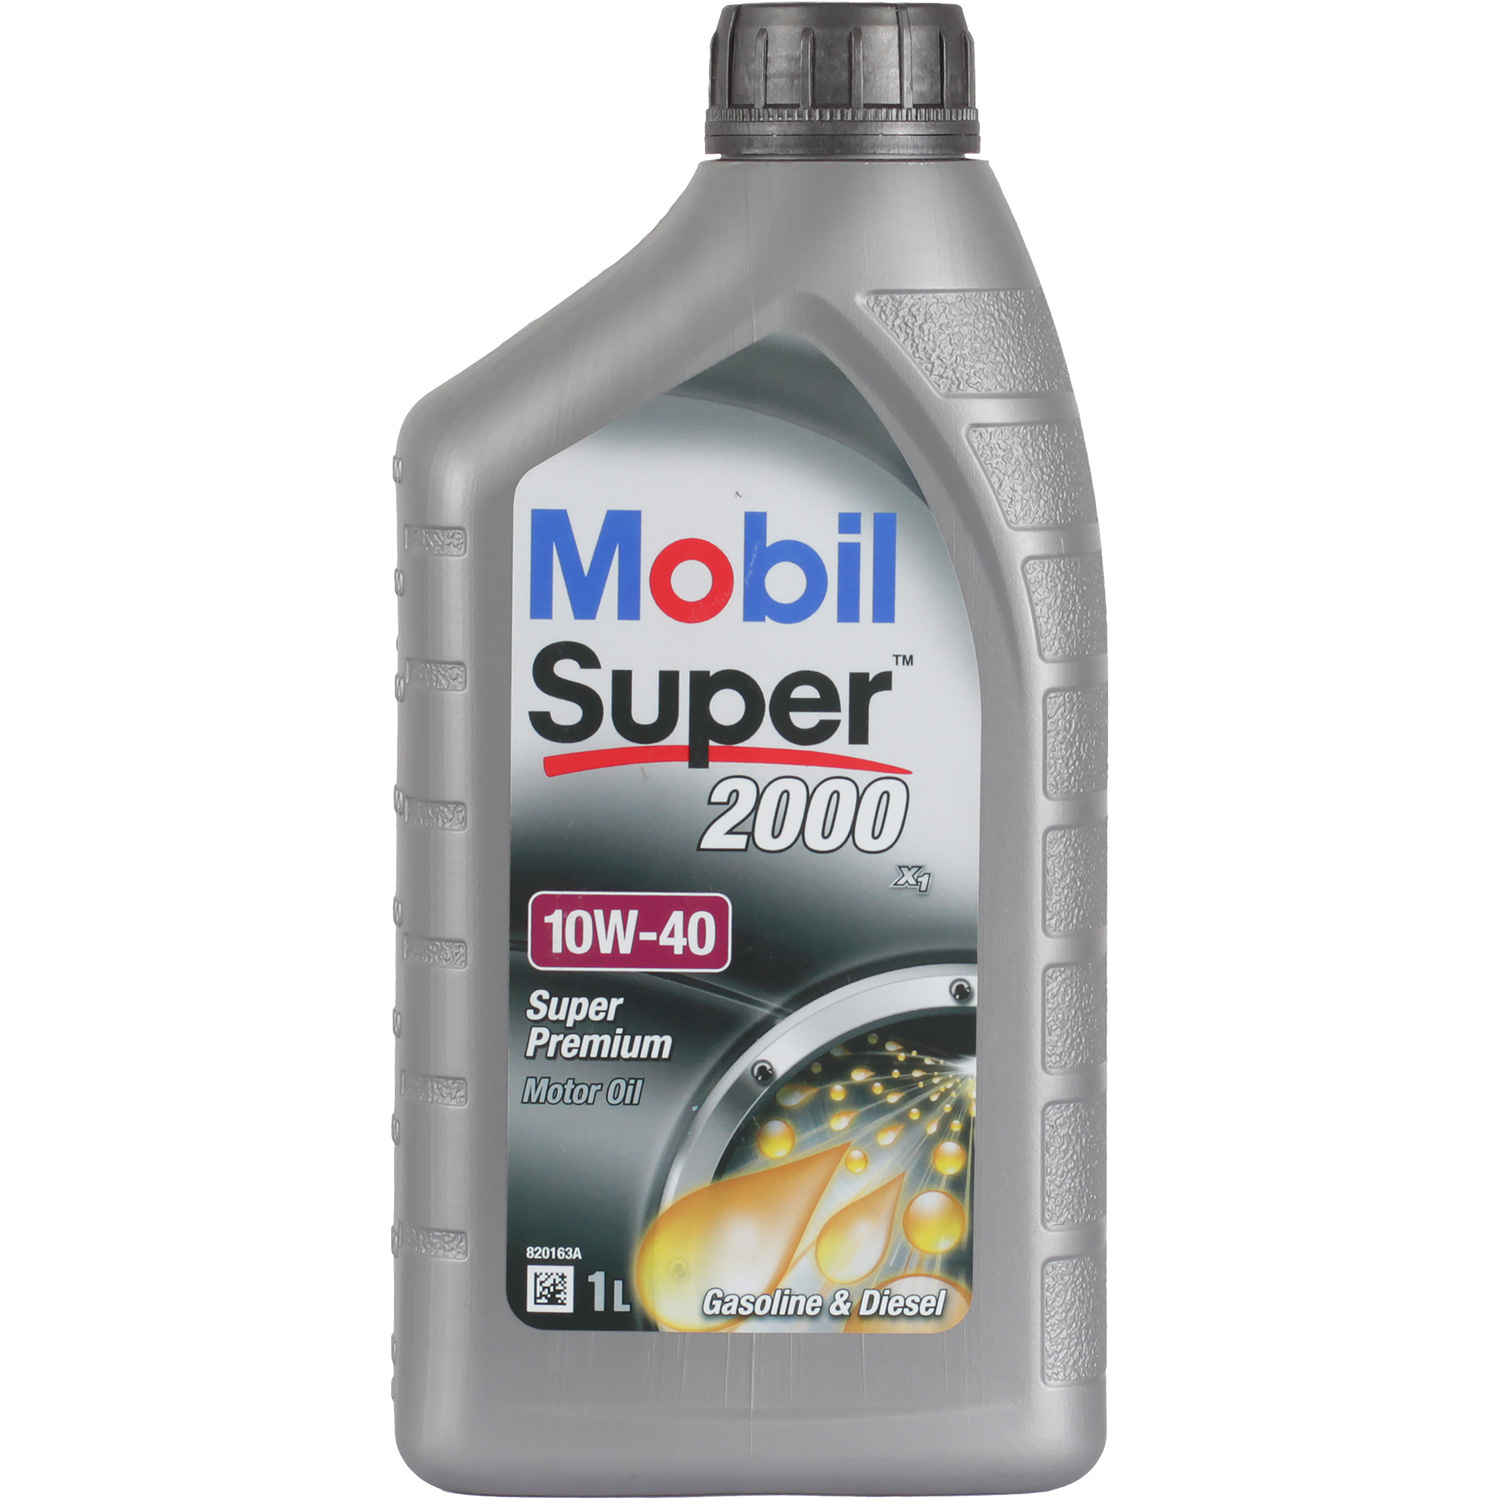 Mobil Моторное масло Mobil Super 2000 X1 10W-40, 1 л